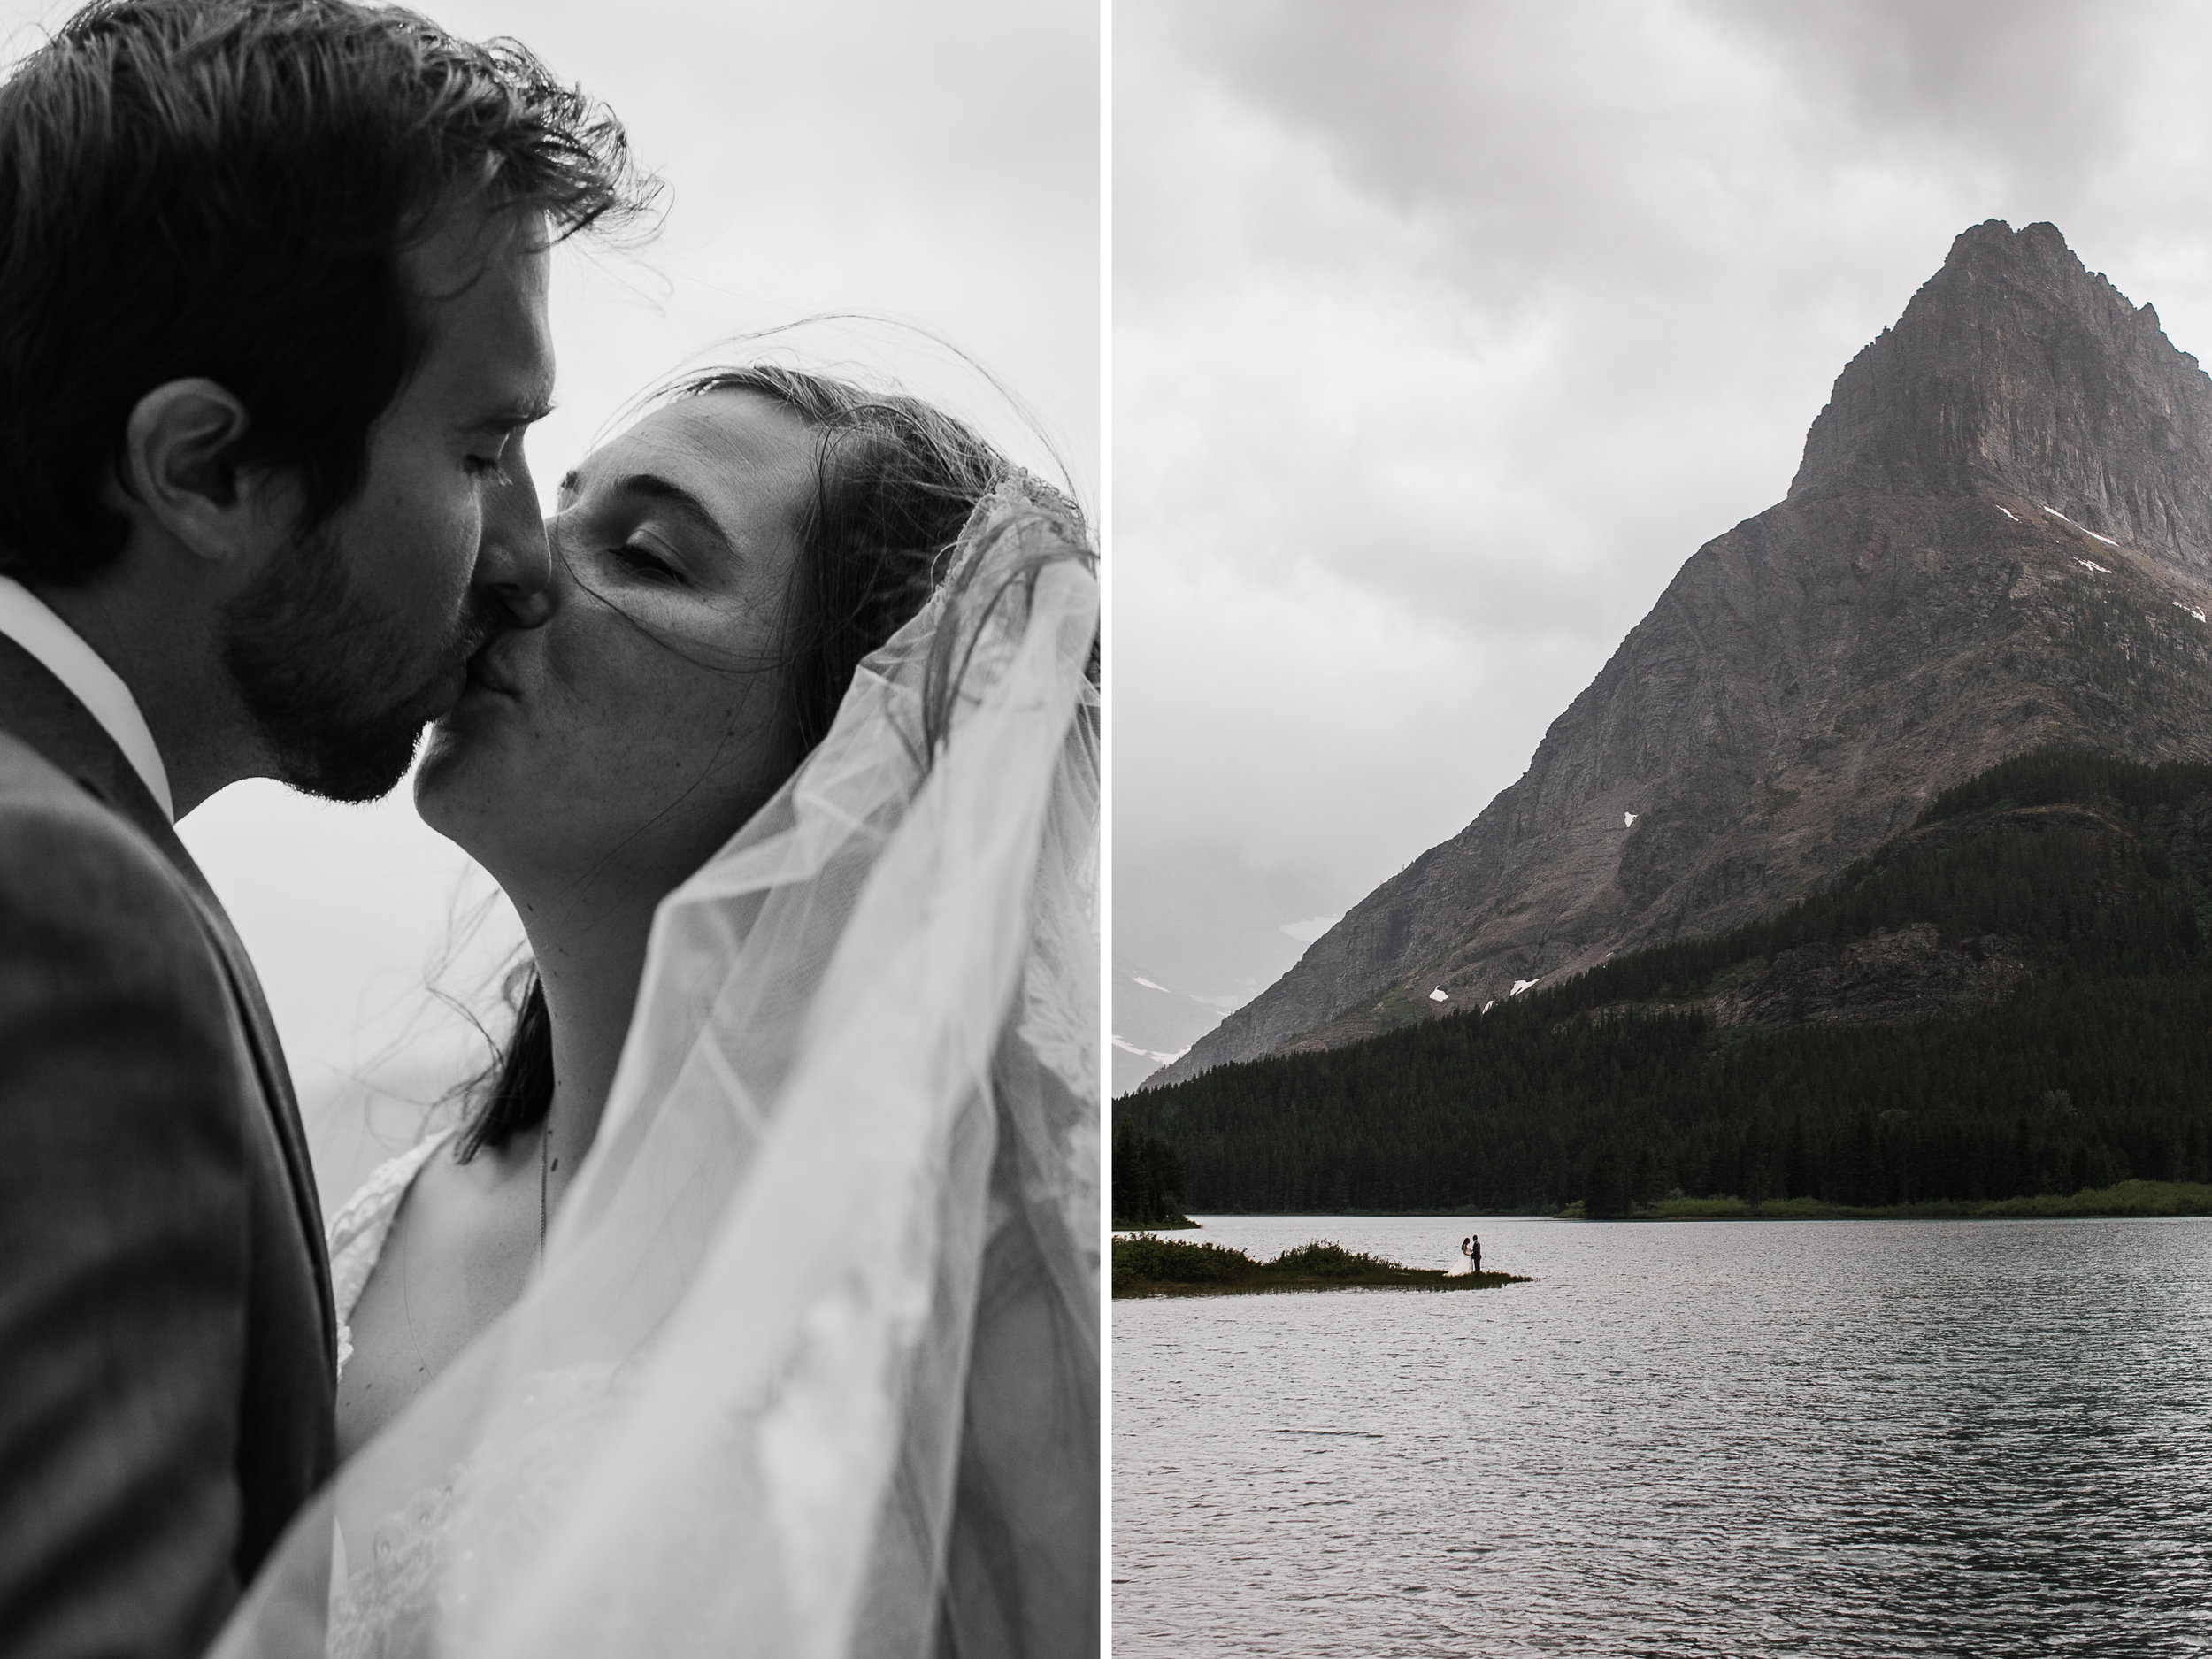 christina + david's post-wedding adventure portrait session in glacier national park | montana wedding + elopement photographer | the hearnes adventure photography